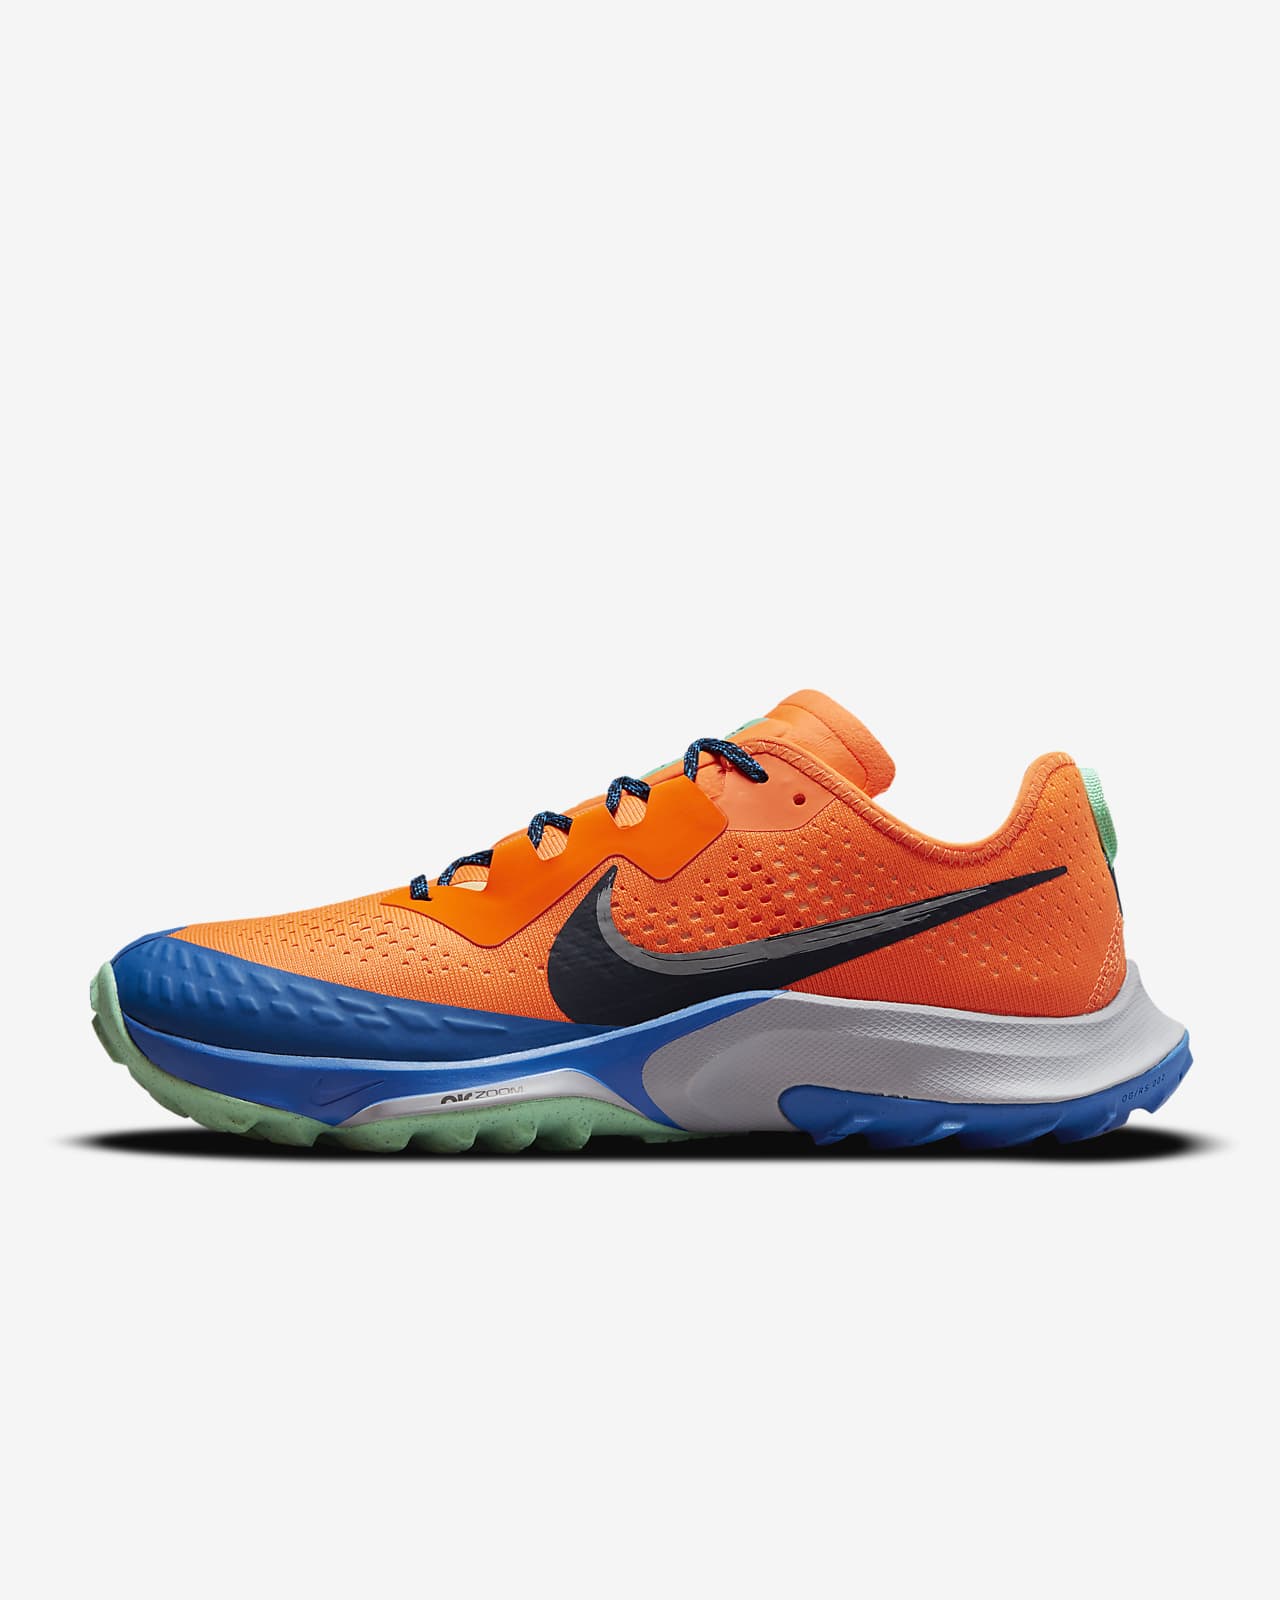 Scarpa da trail running Nike Kiger 7 – Uomo